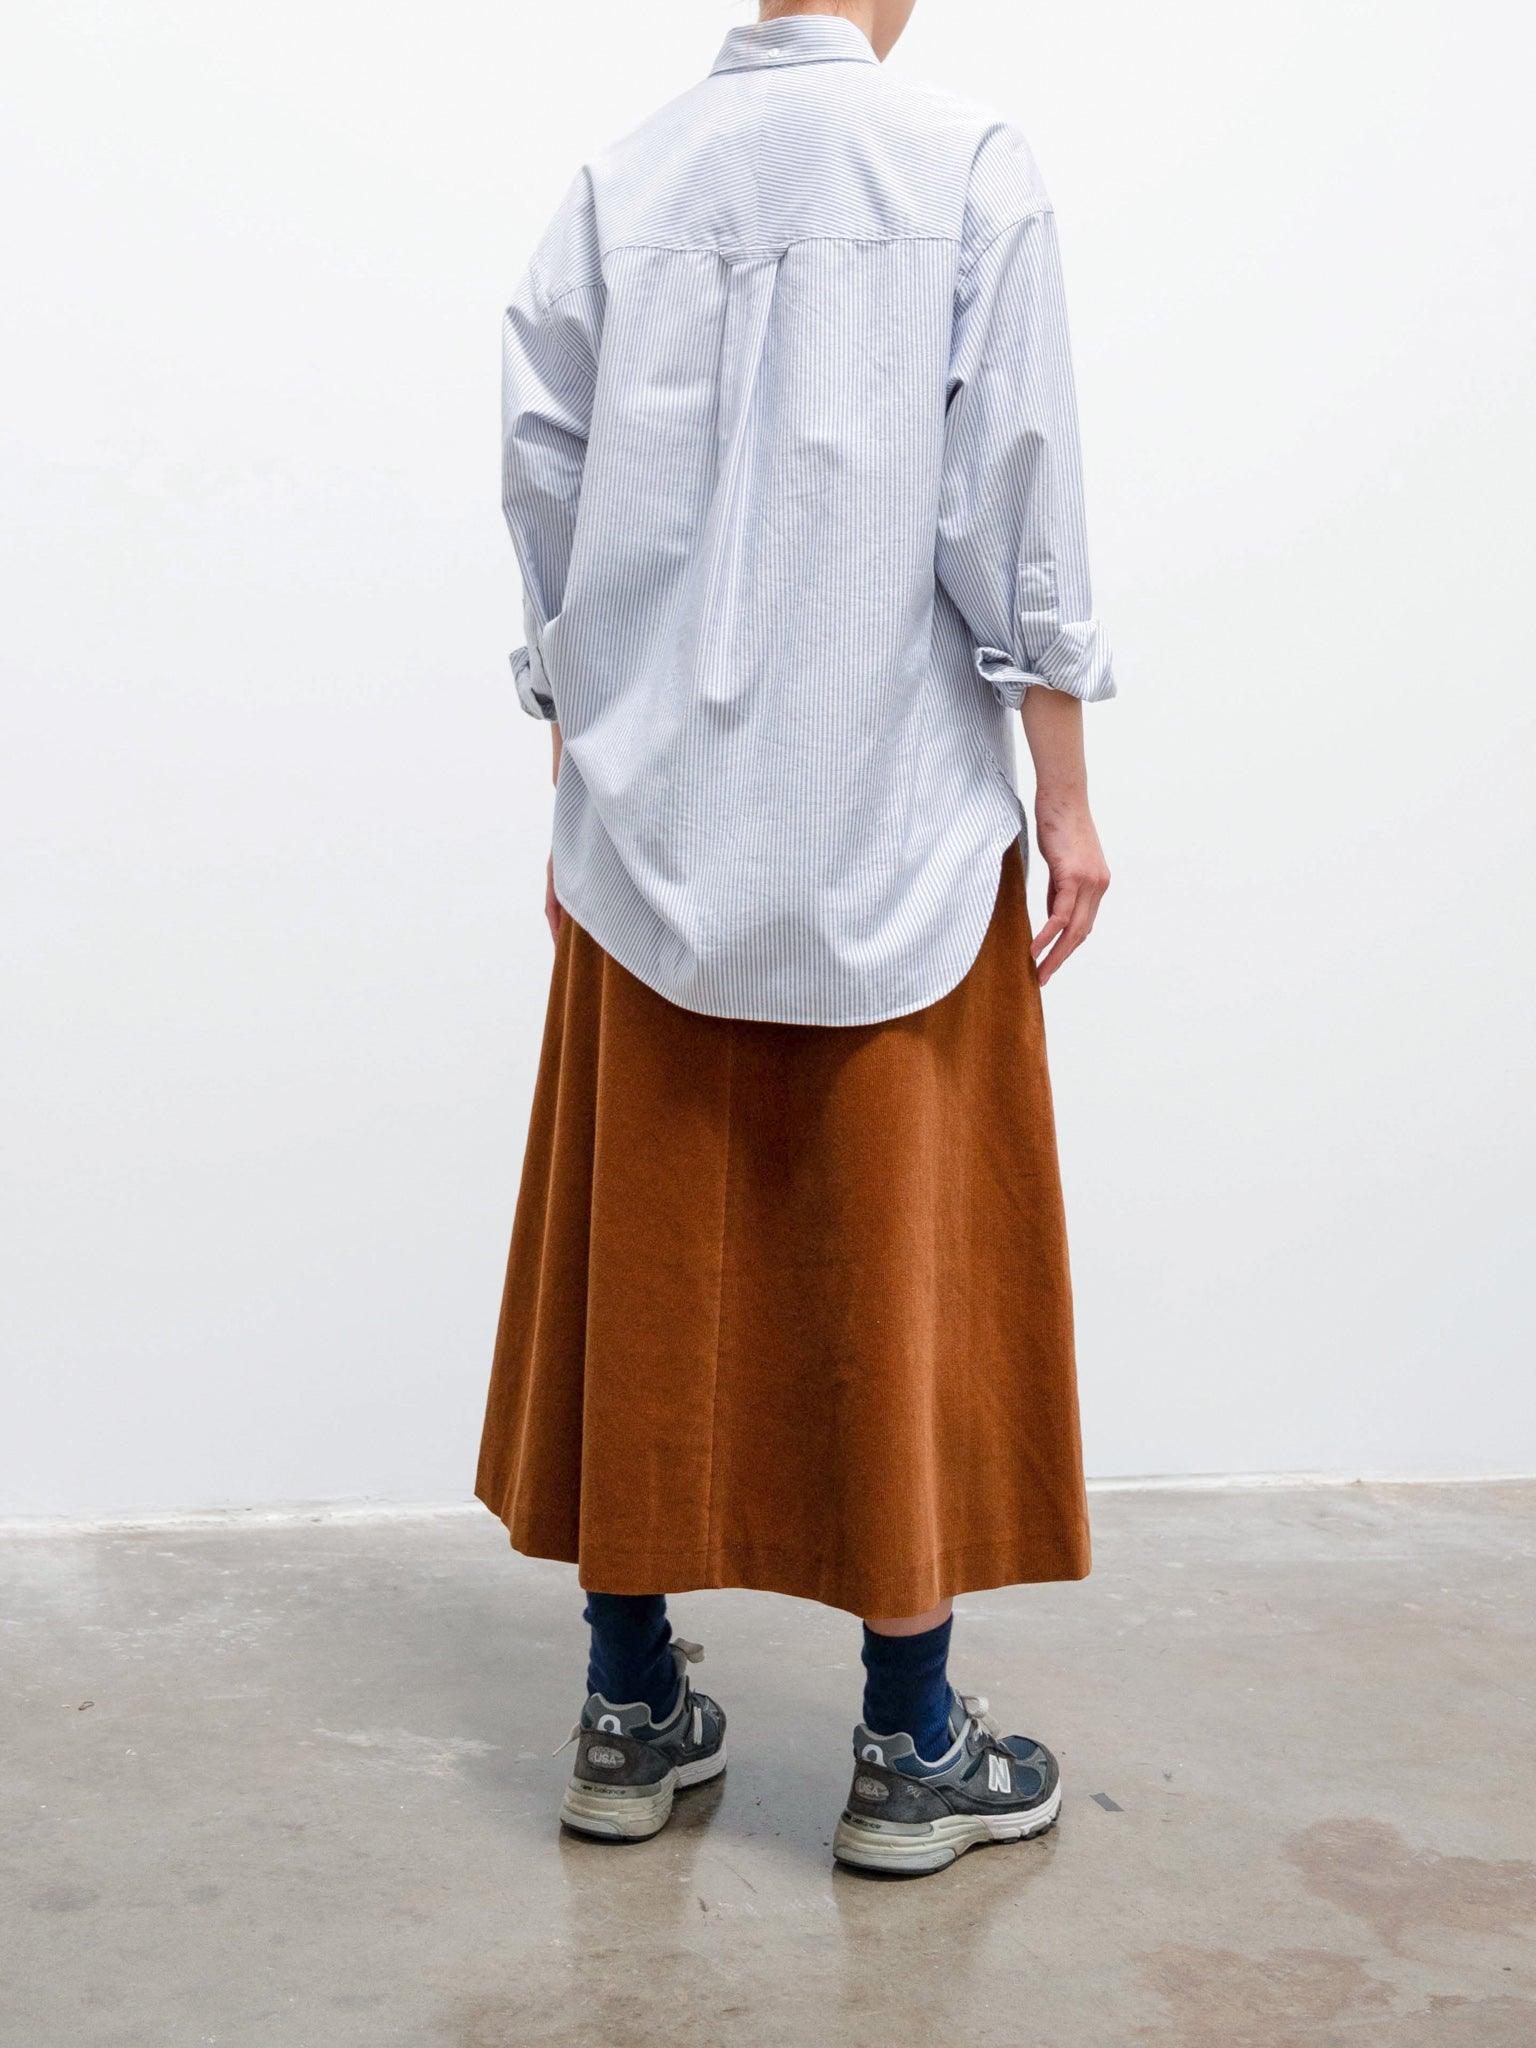 Namu Shop - Studio Nicholson Creed Oxford Shirt - Cornflower Stripe